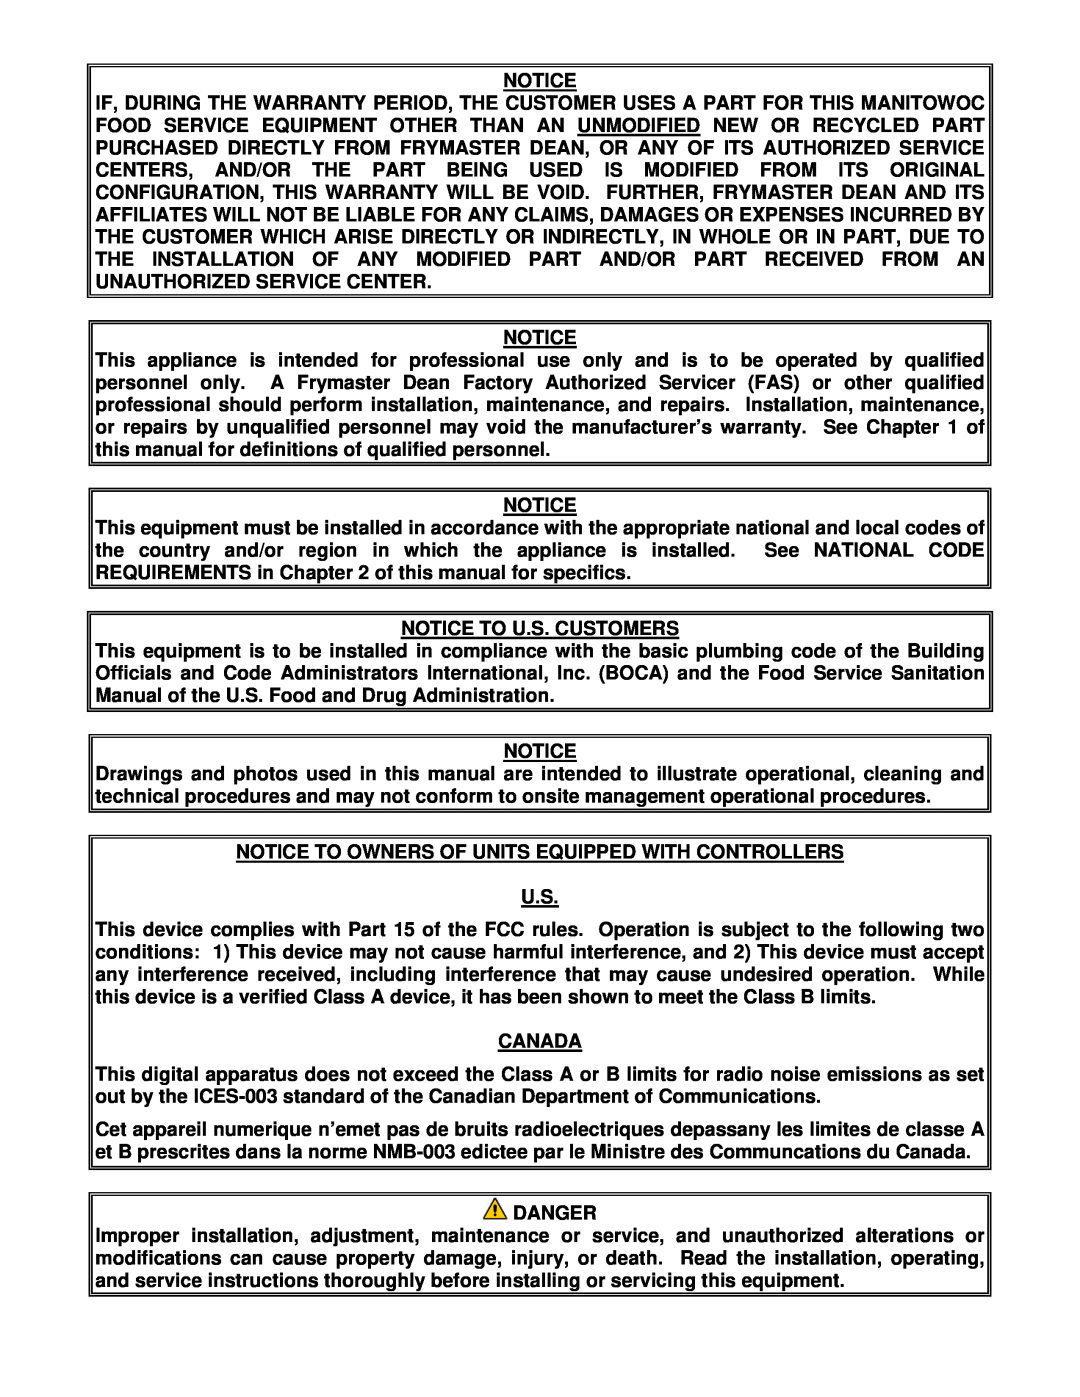 Frymaster OCF30 operation manual Notice To U.S. Customers, Canada, Danger 